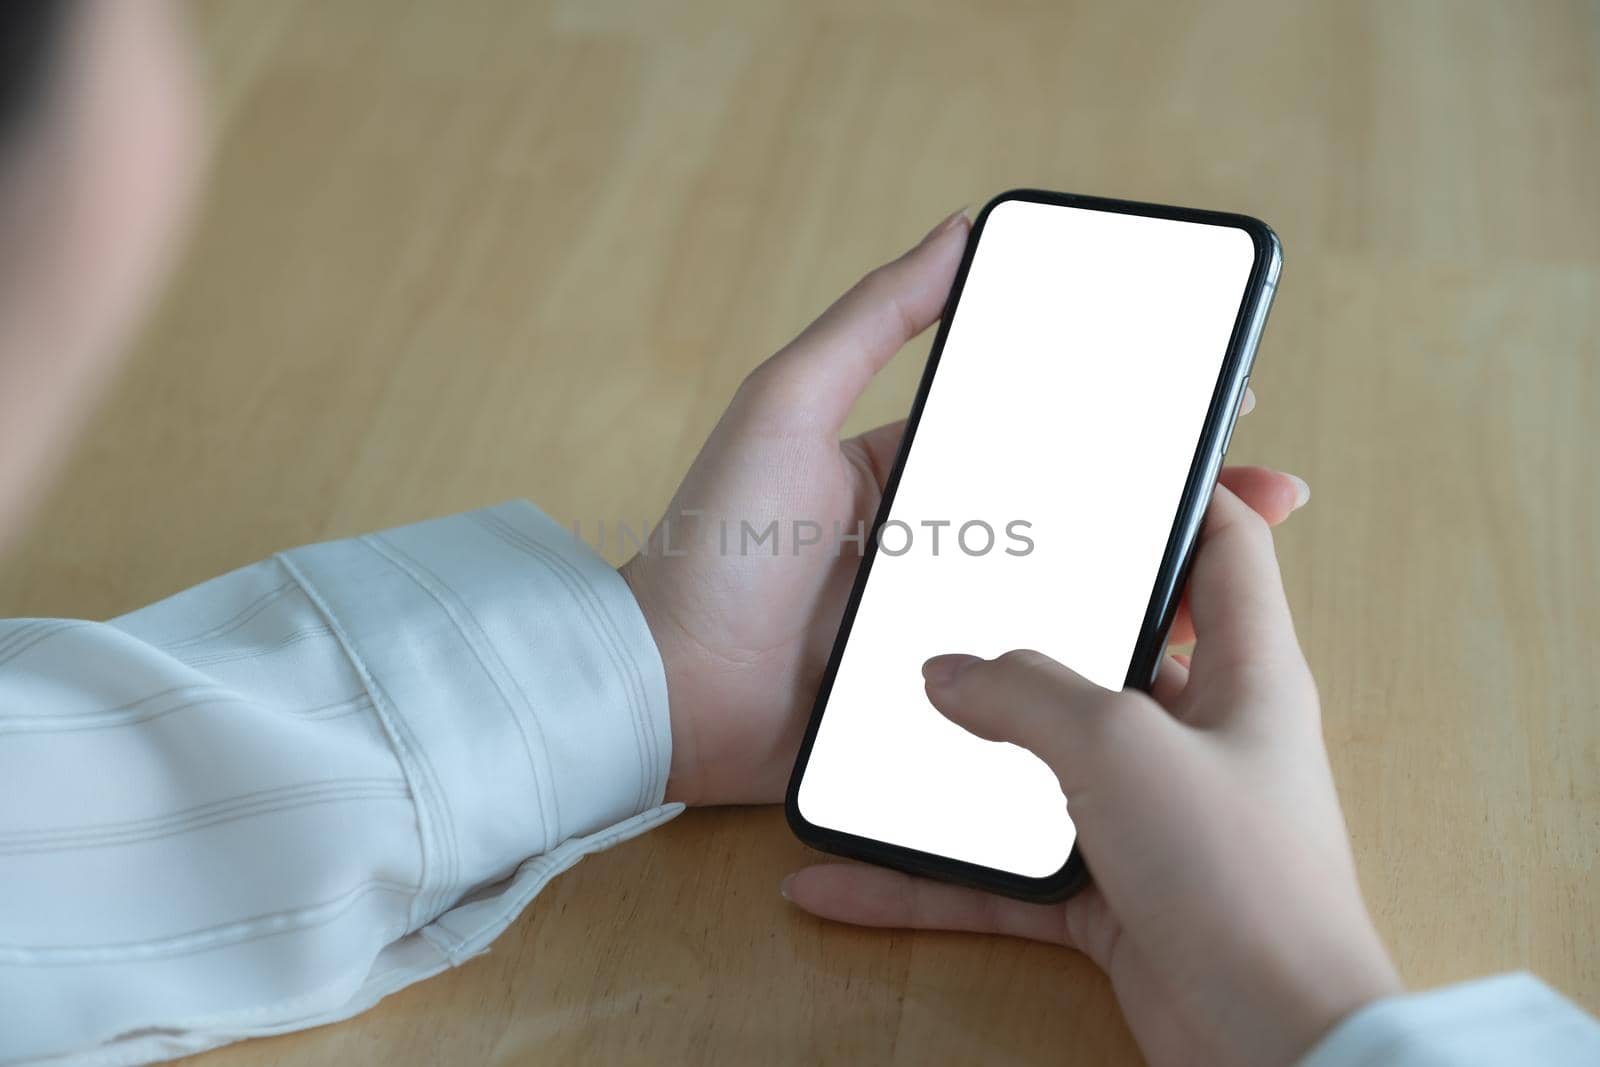 Asian woman holding smartphone with blank screen frameless modern design. Technology concept